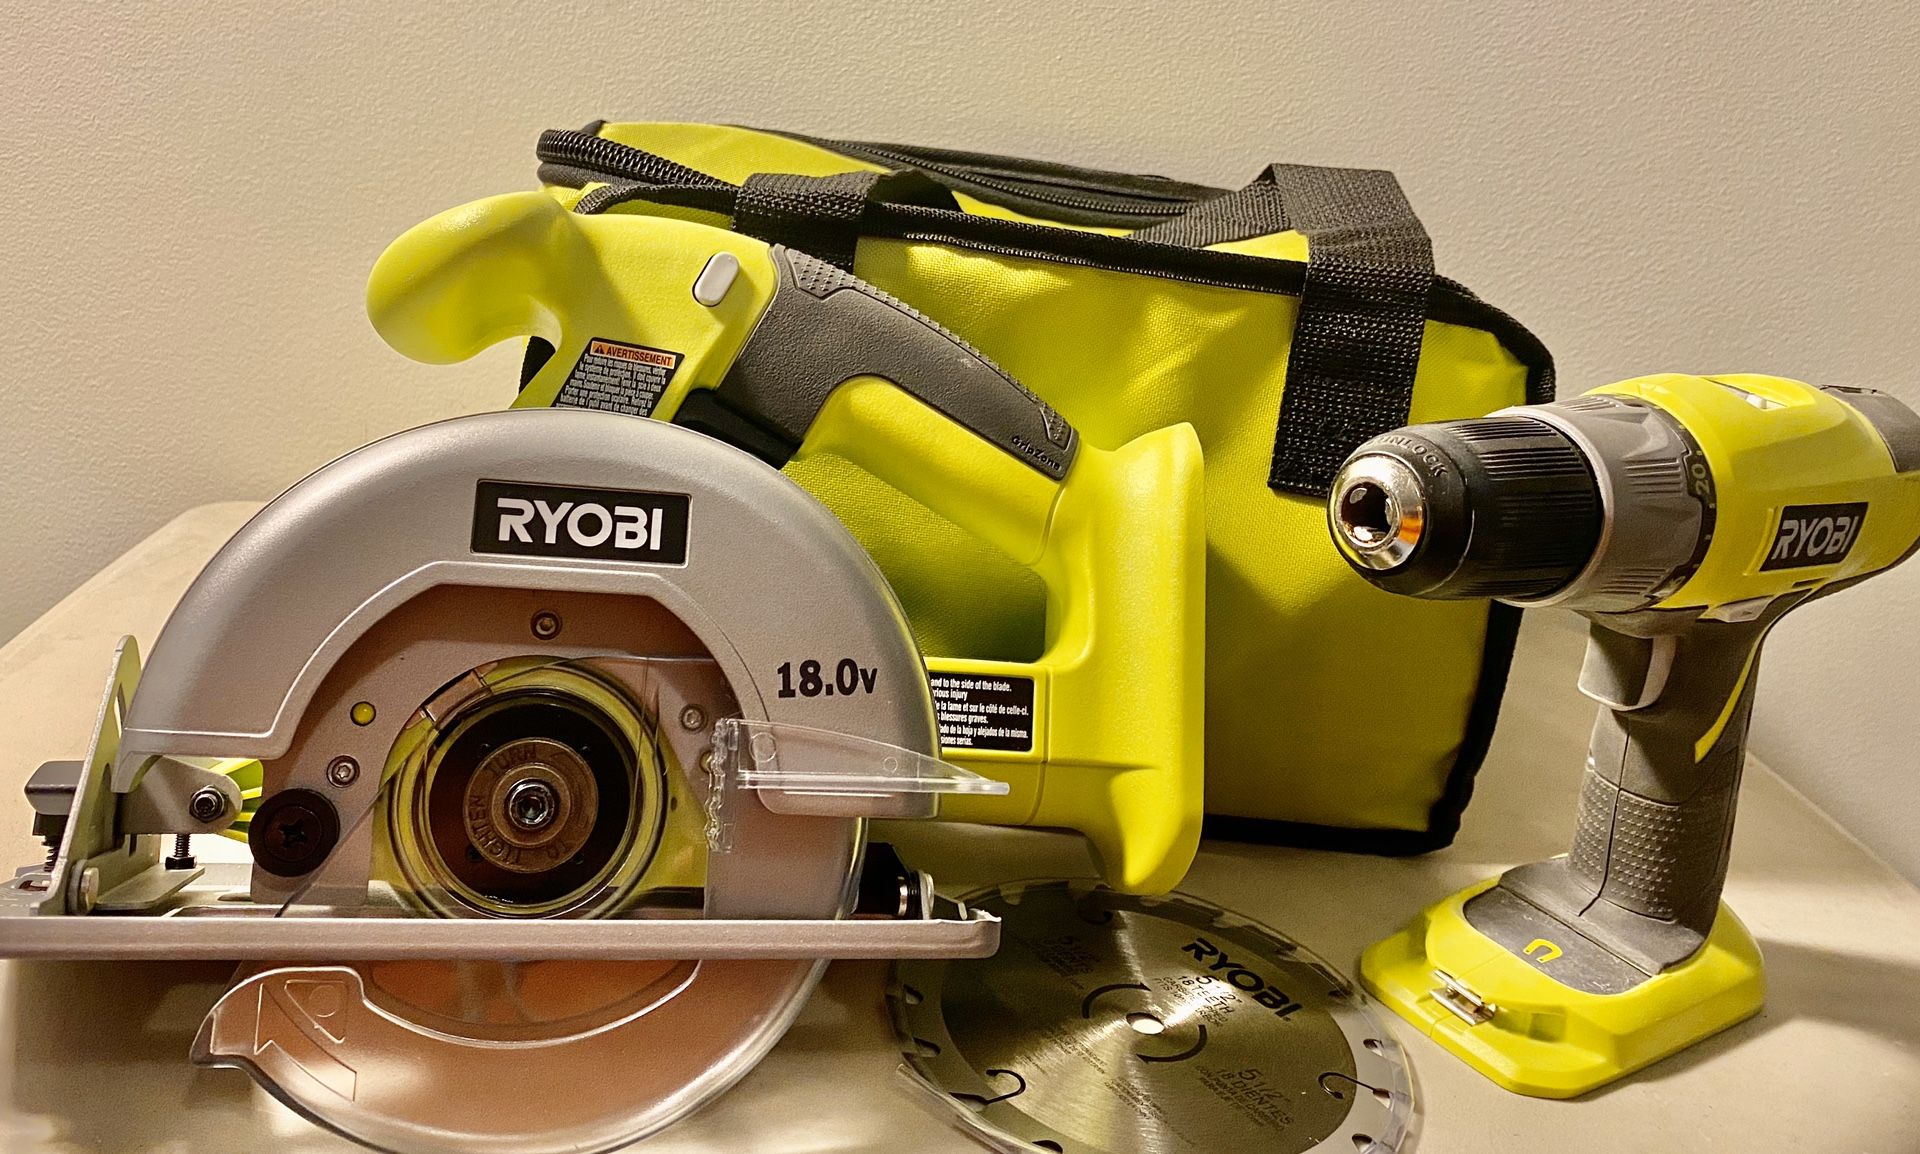 Ryobi tool set